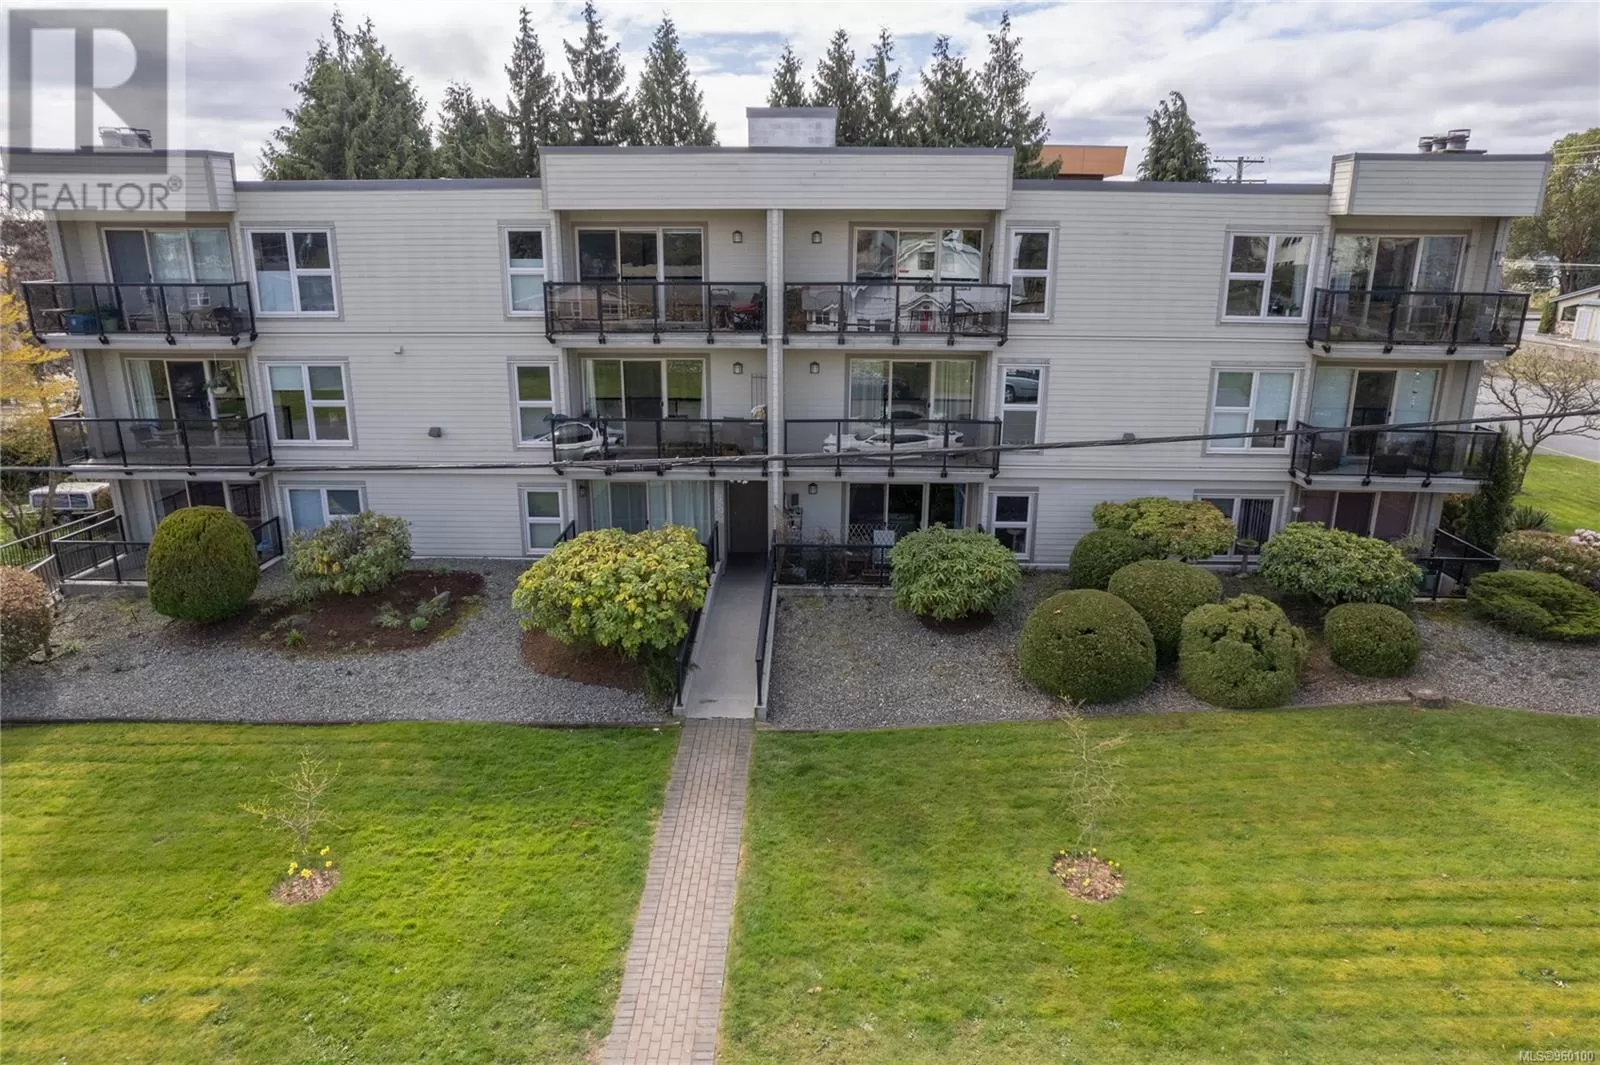 Apartment for rent: 104 160 Vancouver Ave, Nanaimo, British Columbia V9S 4E8